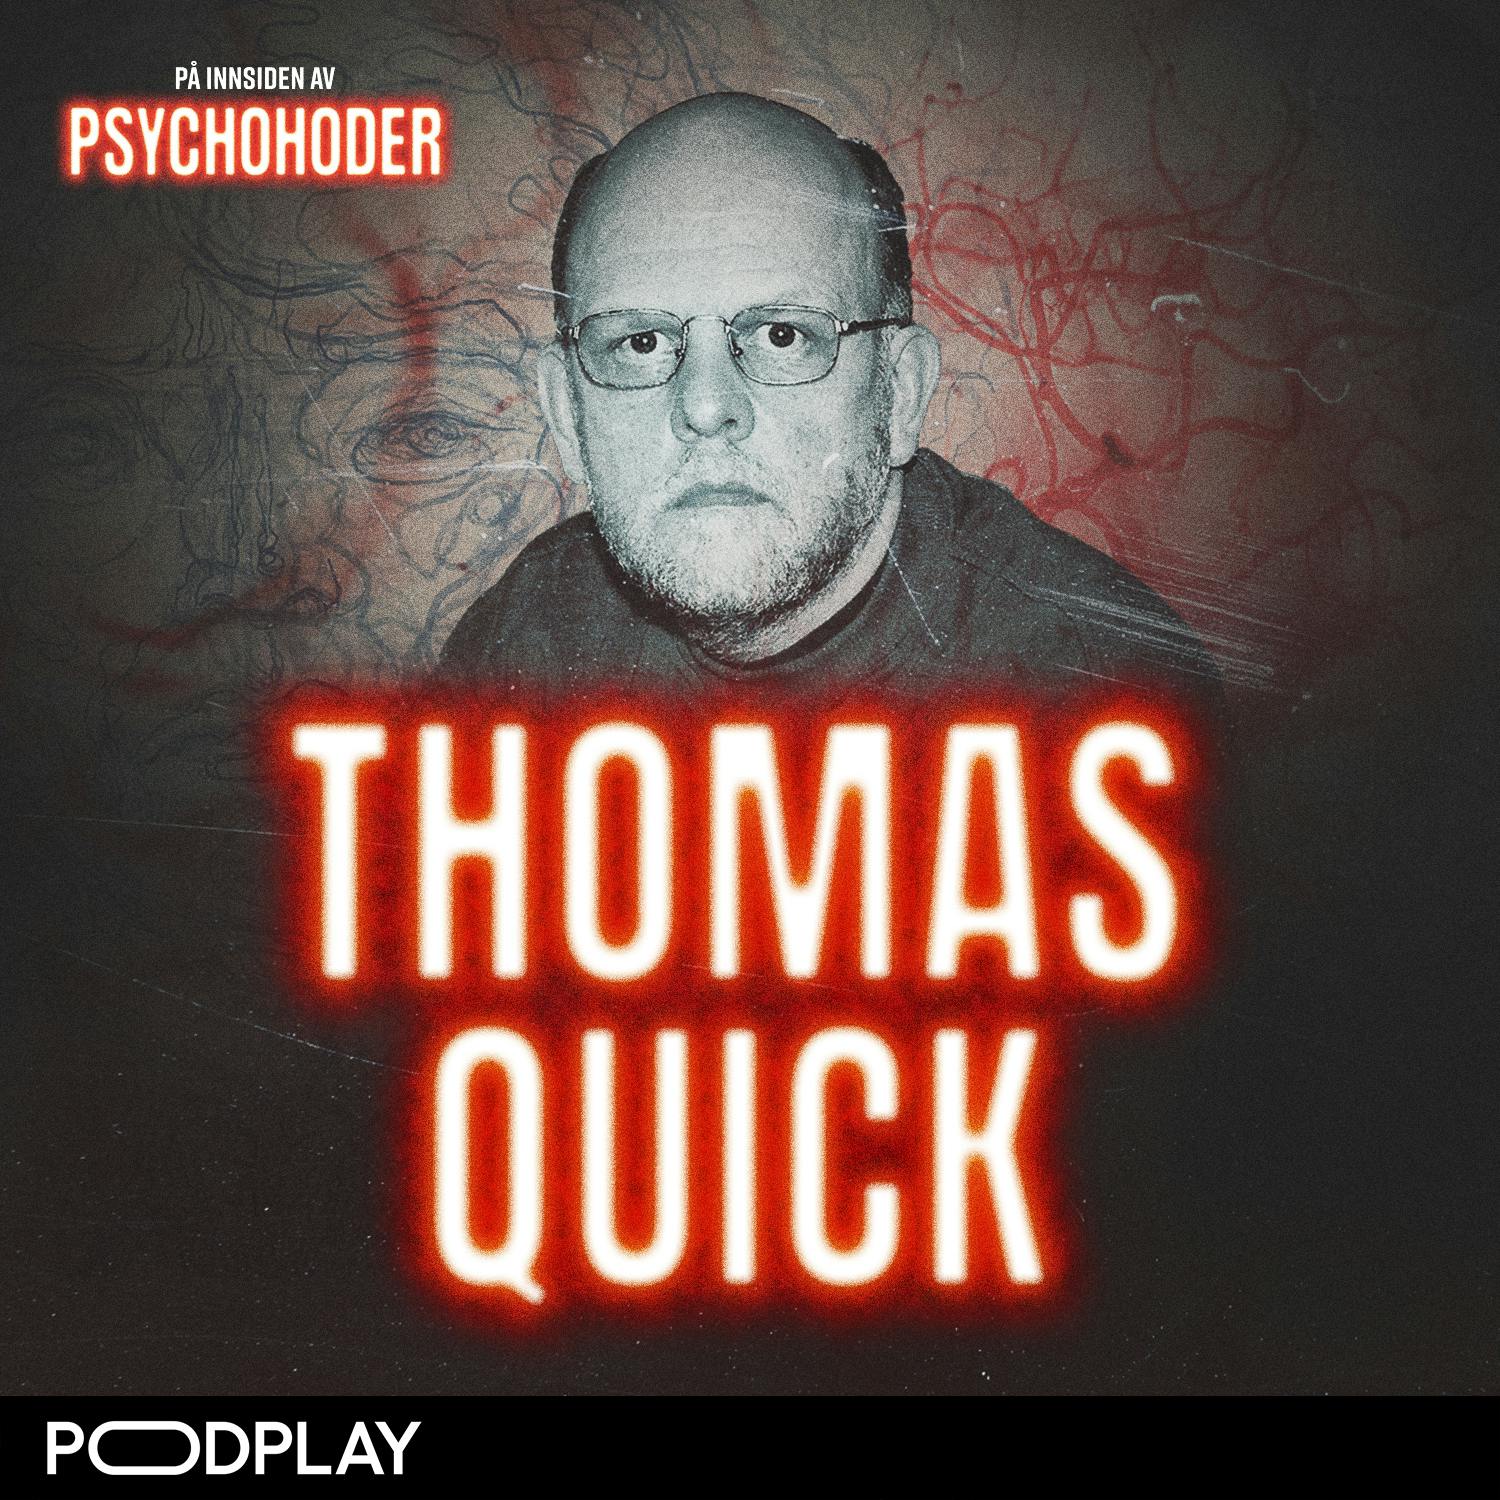 Thomas Quick – mytomanen som tilsto hele 39 drap